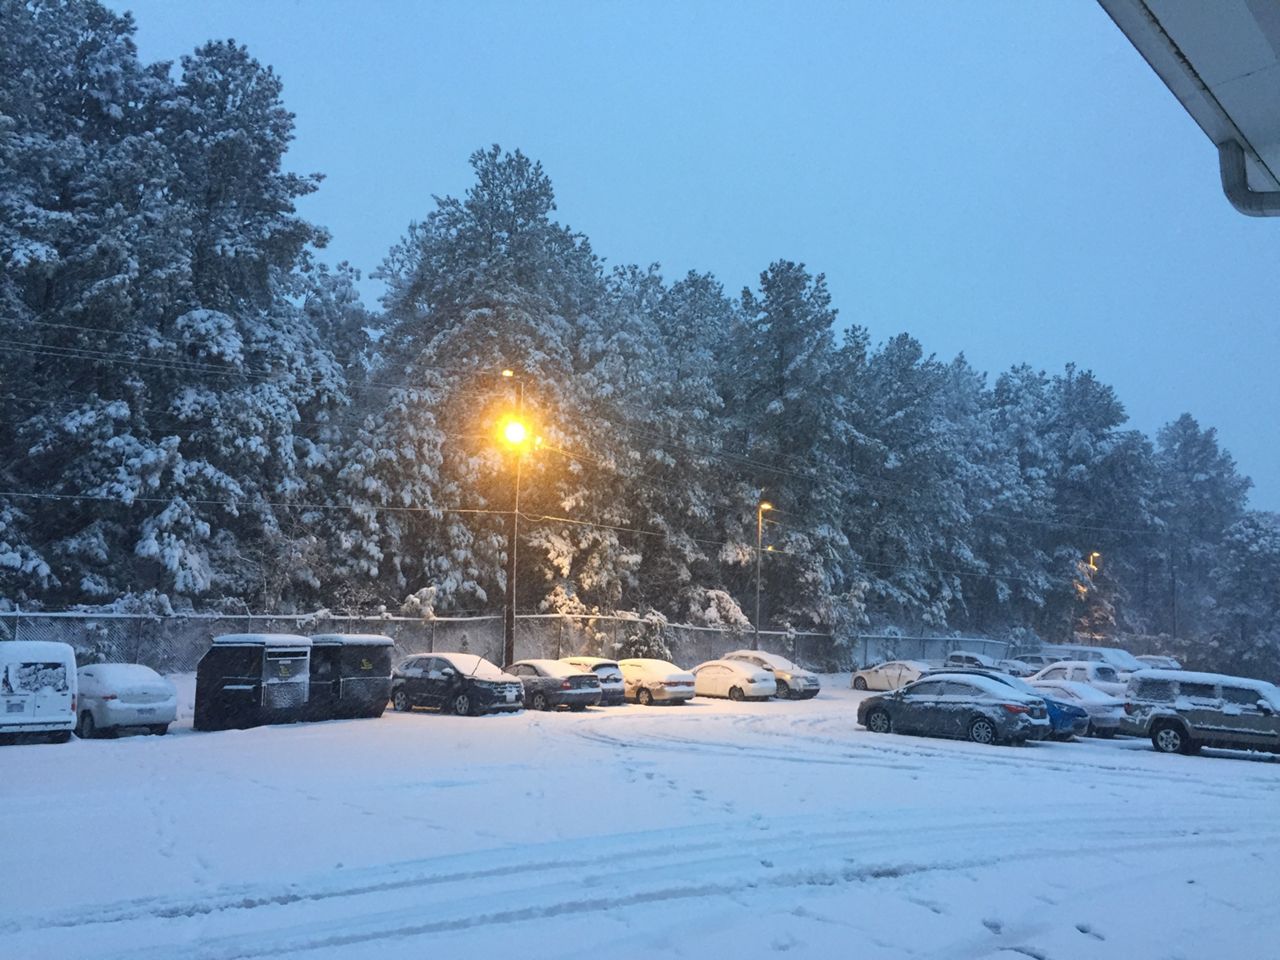 Winter arrives in North Carolina.